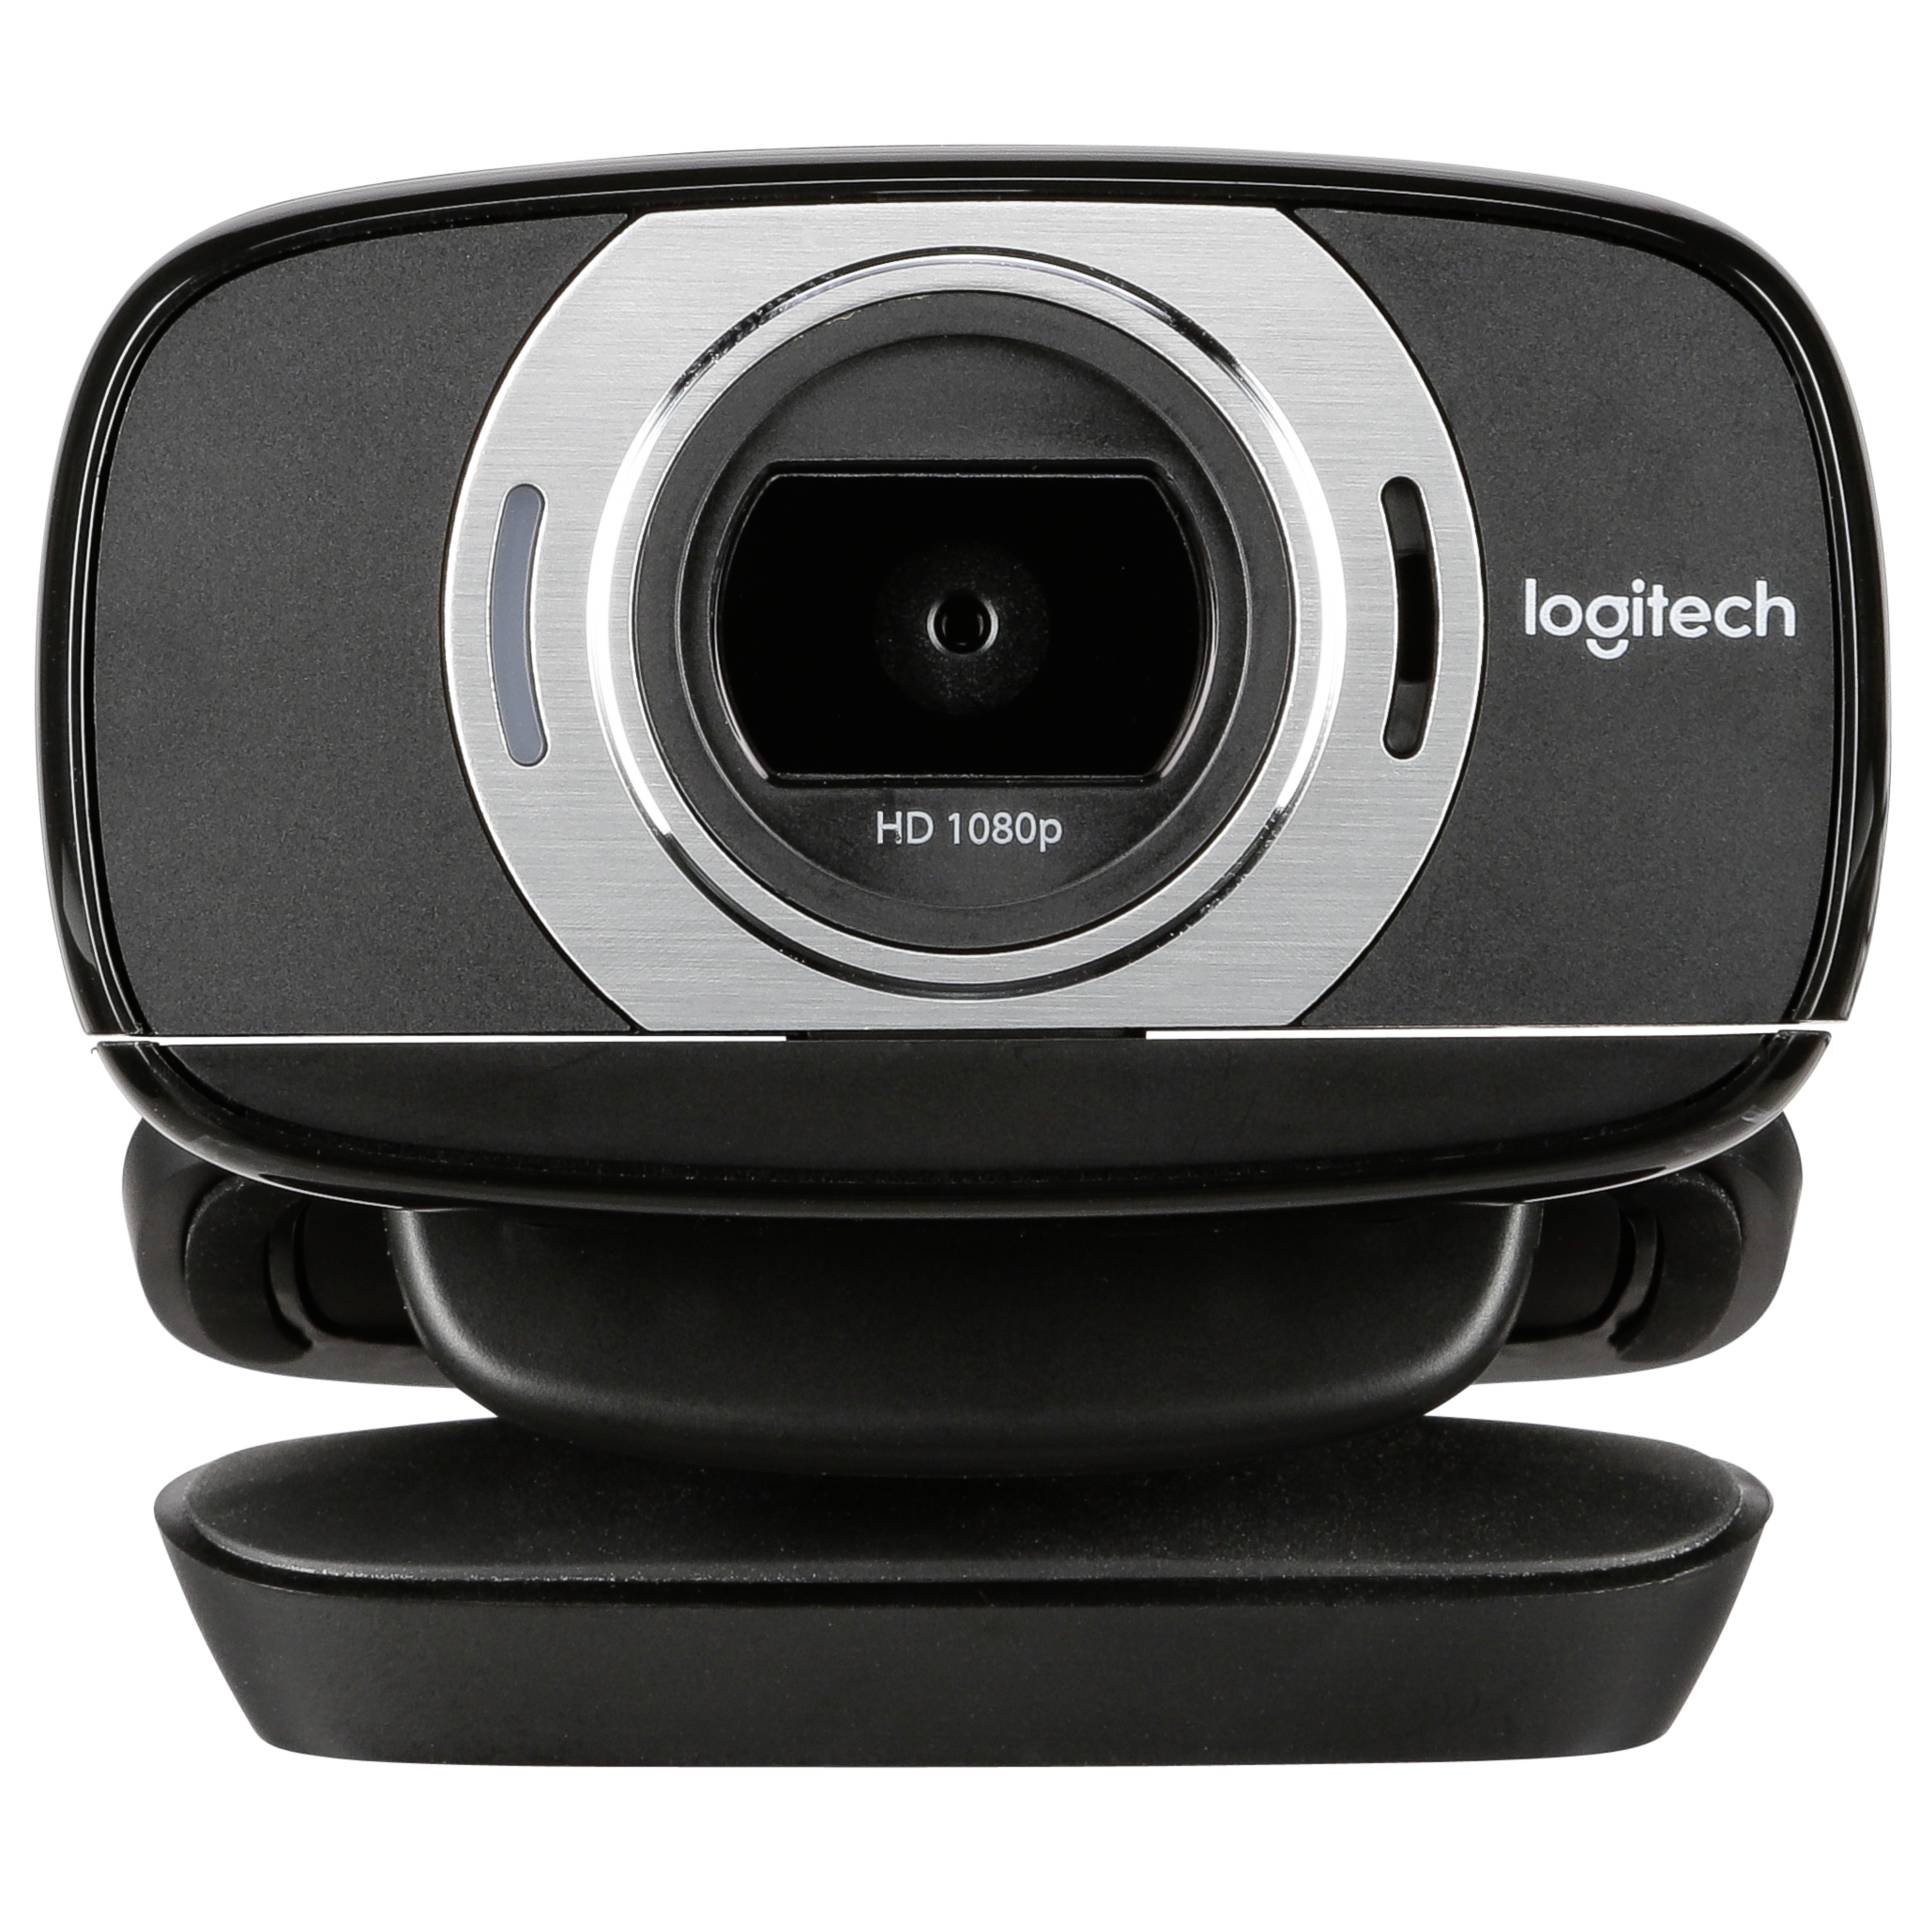 Logitech HD C615, USB 2.0 Full HD Webcam 